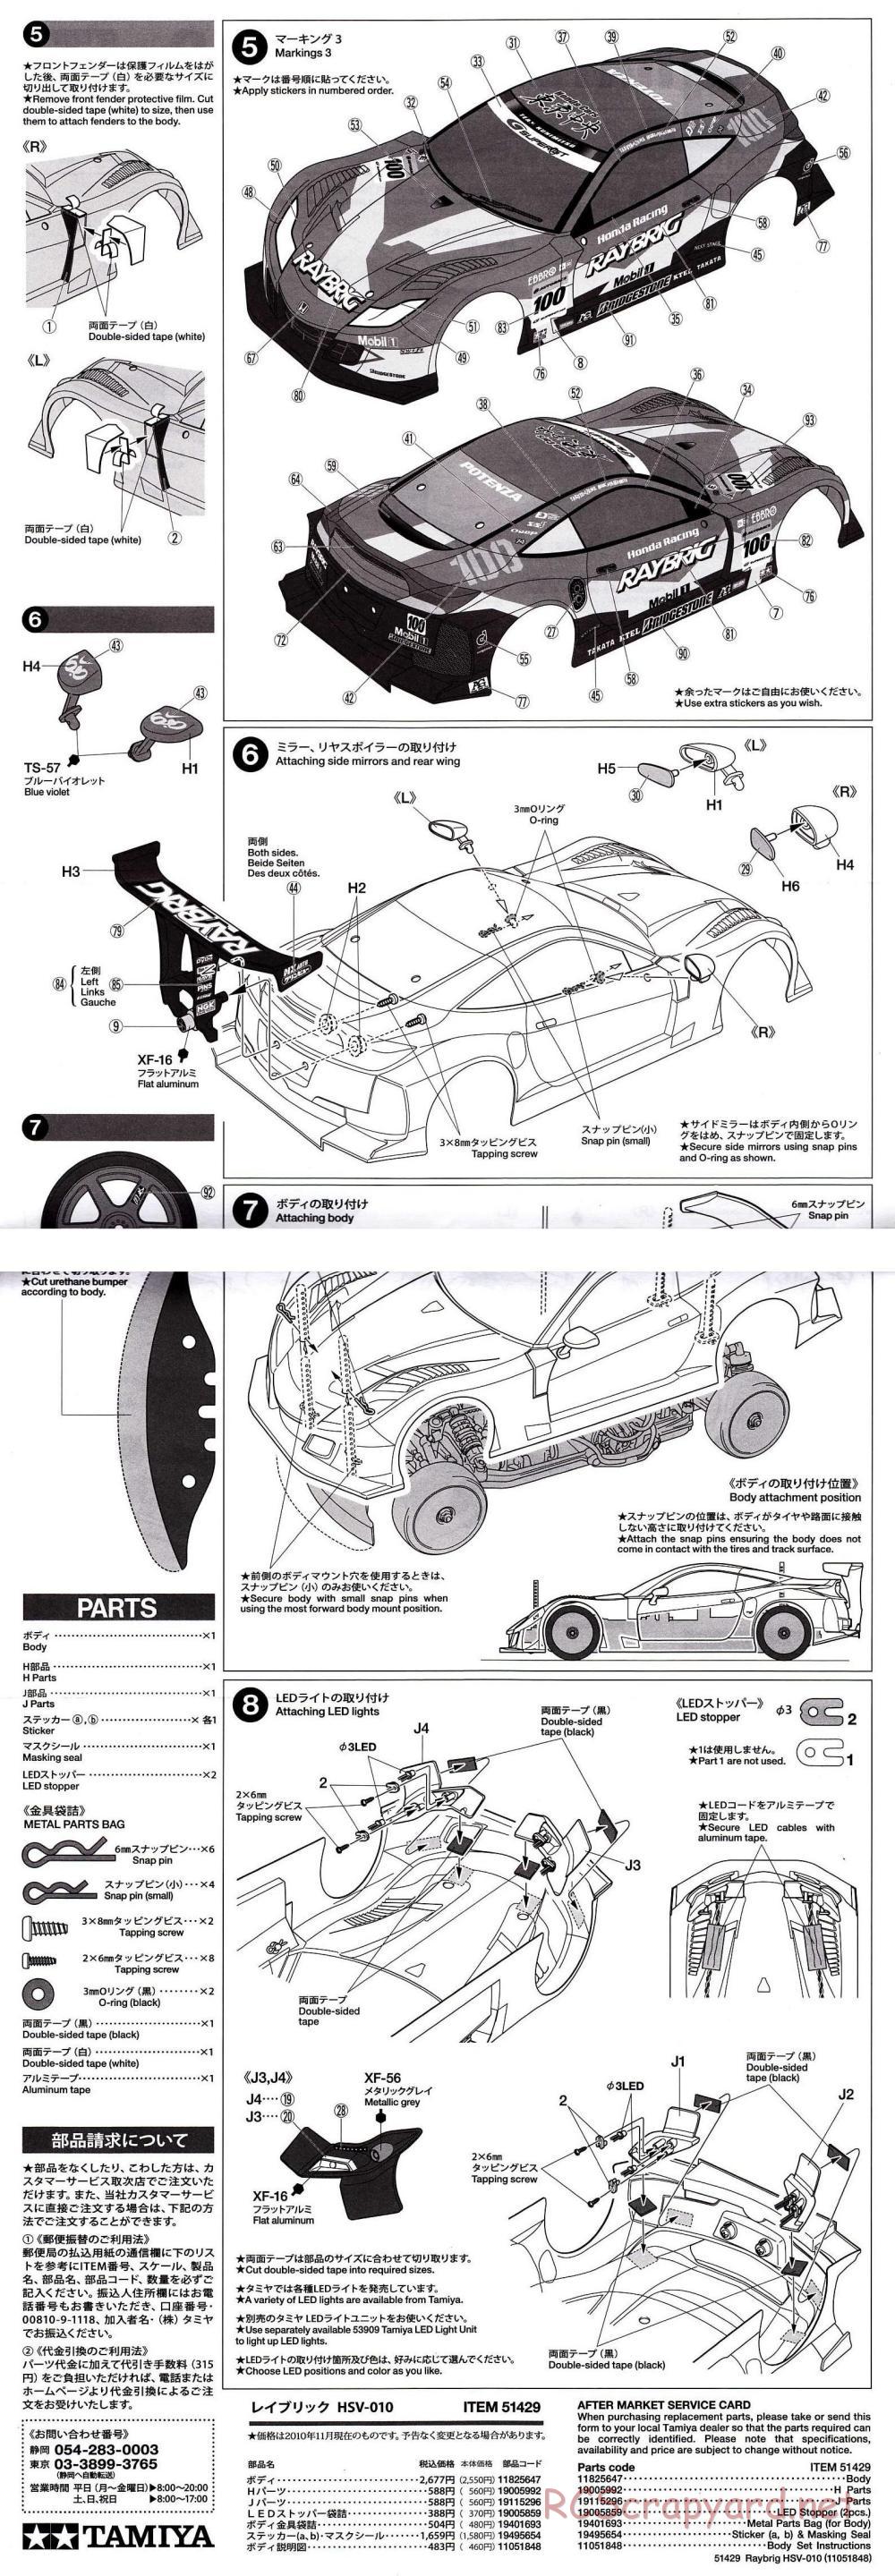 Tamiya - Raybrig HSV-010 - TA05 Ver.II Chassis - Body Manual - Page 2